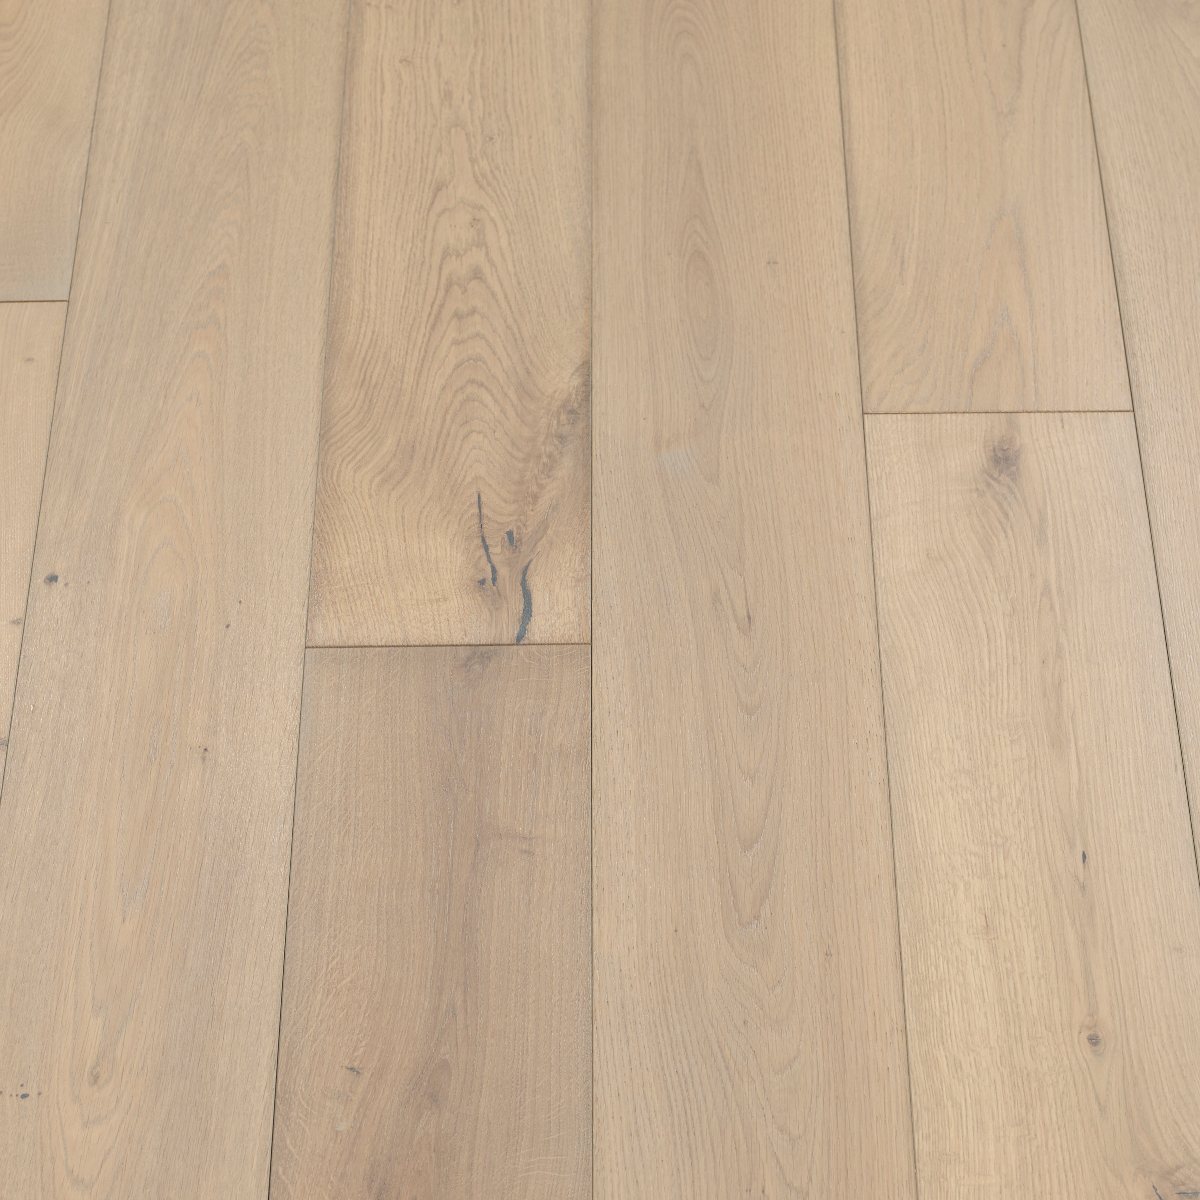 Sand 190mm x 18mm x 1900mm Bespoke Wood Flooring